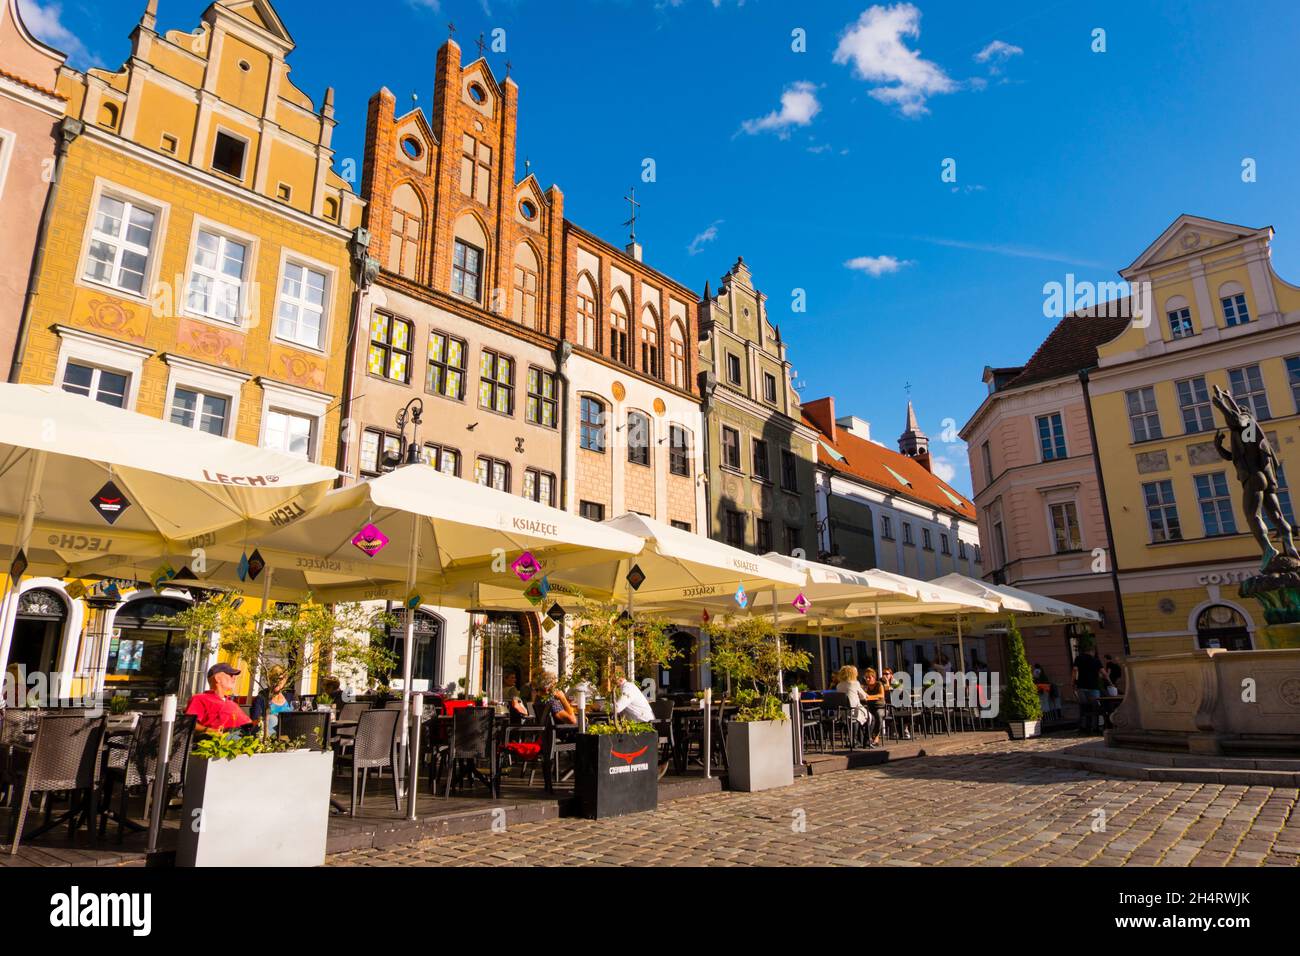 Stary Rynek, old town square, Poznan, Poland Stock Photo